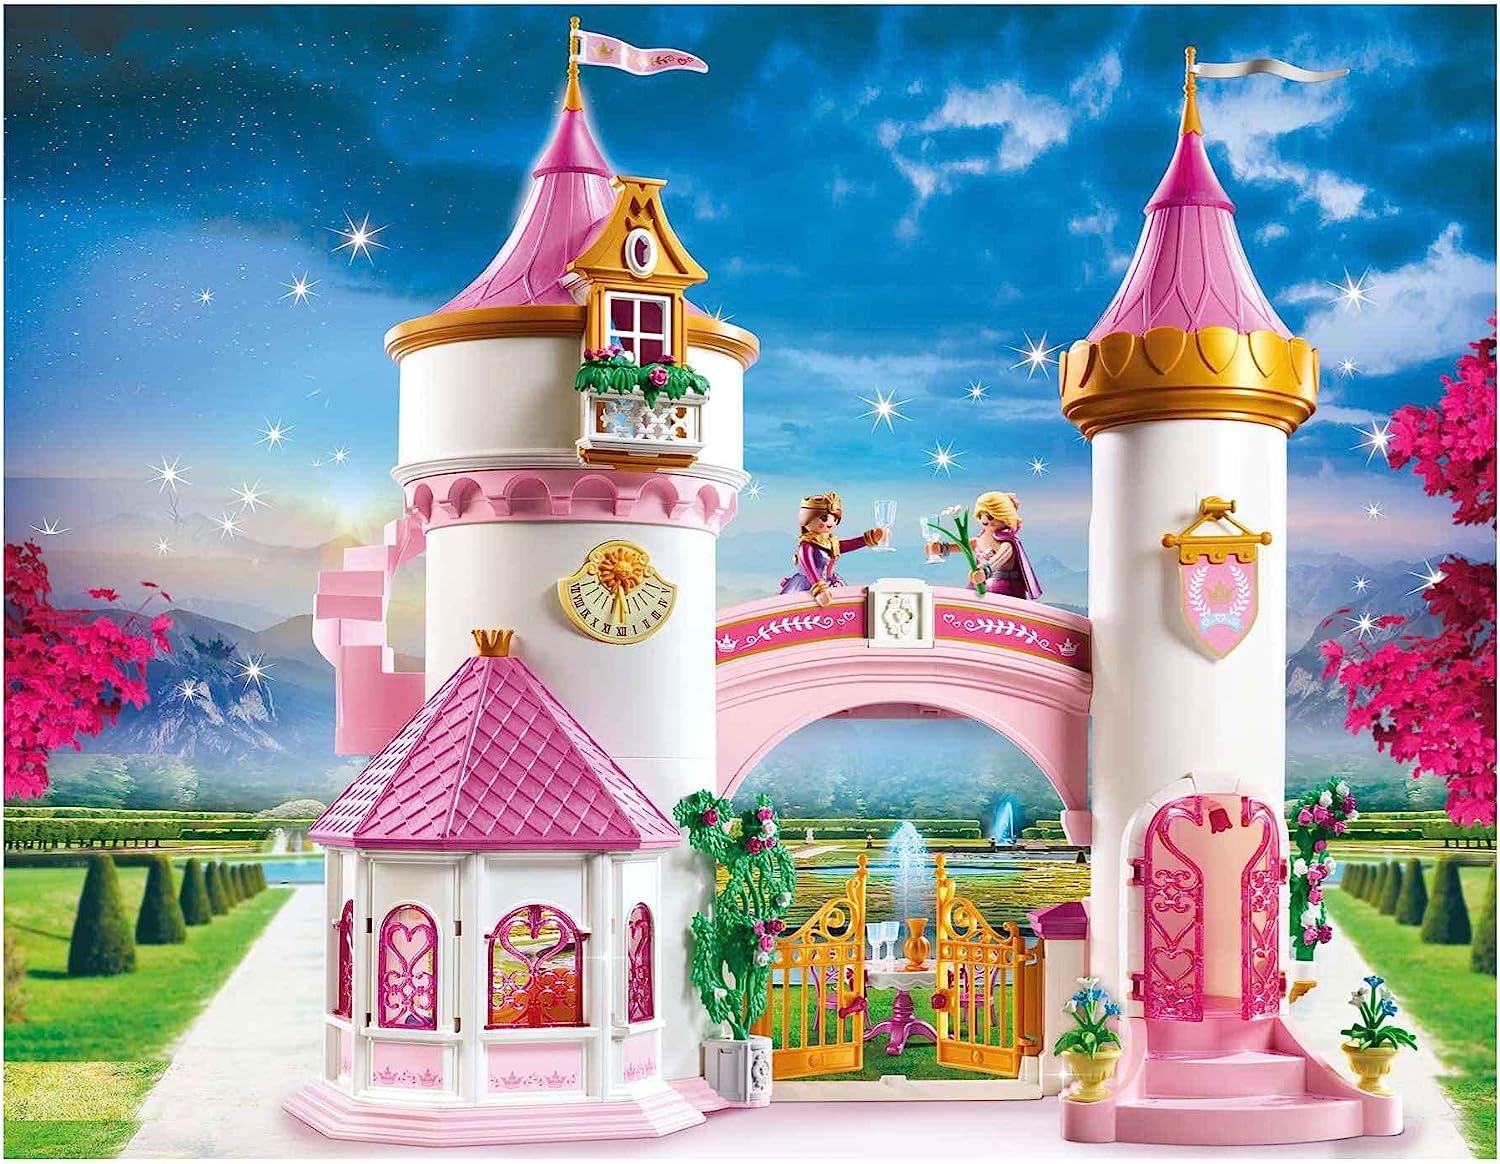 Playmobil Princess Castle Toy